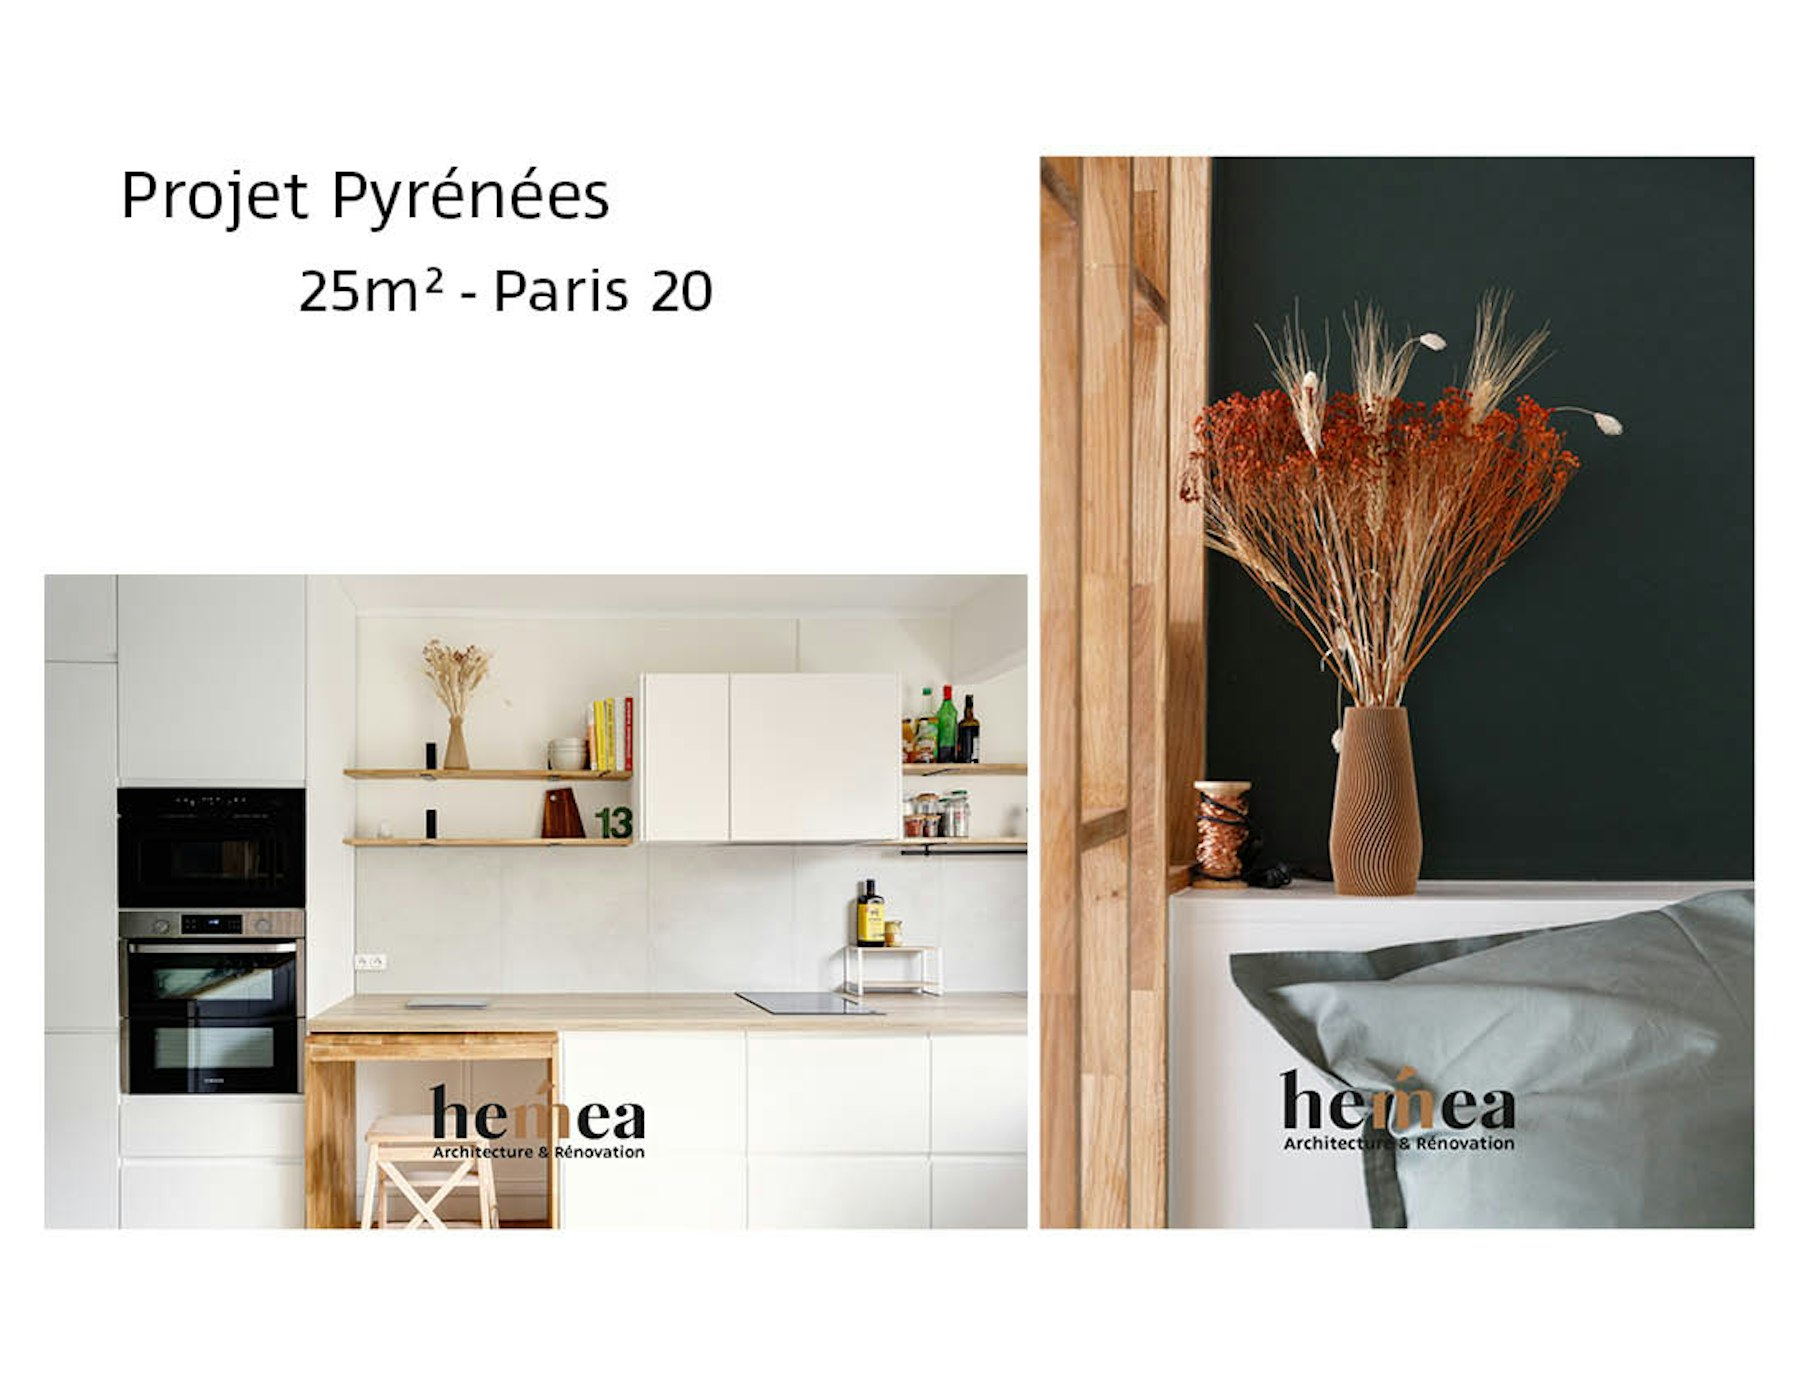 photo Projet Pyrénées - 25m² - Paris 20 Léa Mast - Architecte hemea